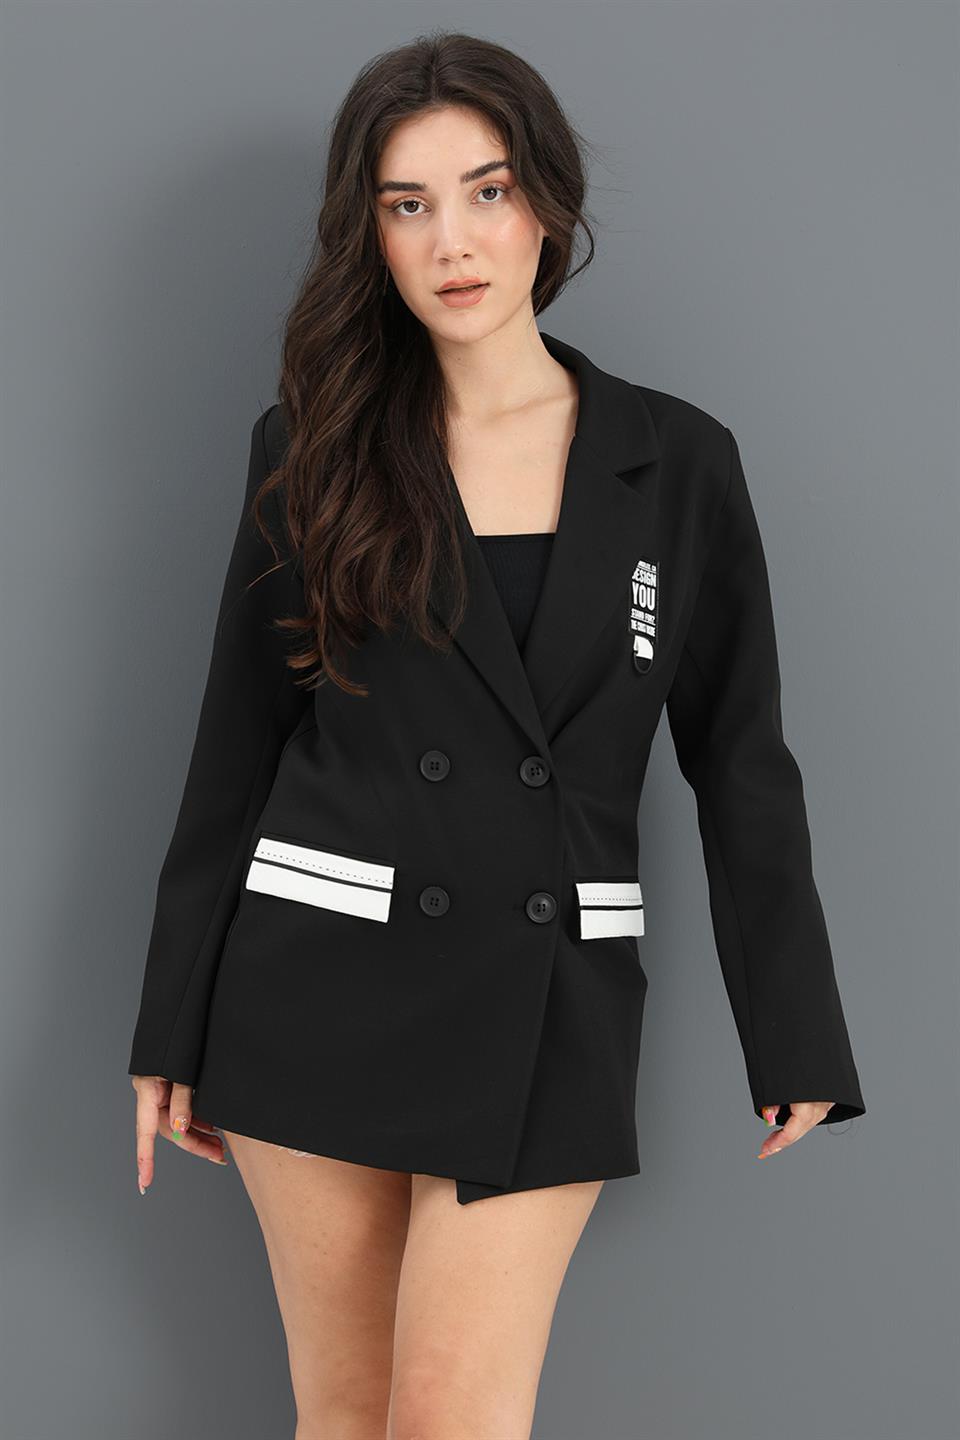 Women's Jacket Pocket Cover Garnish Atlas Fabric - Black - STREET MODE ™